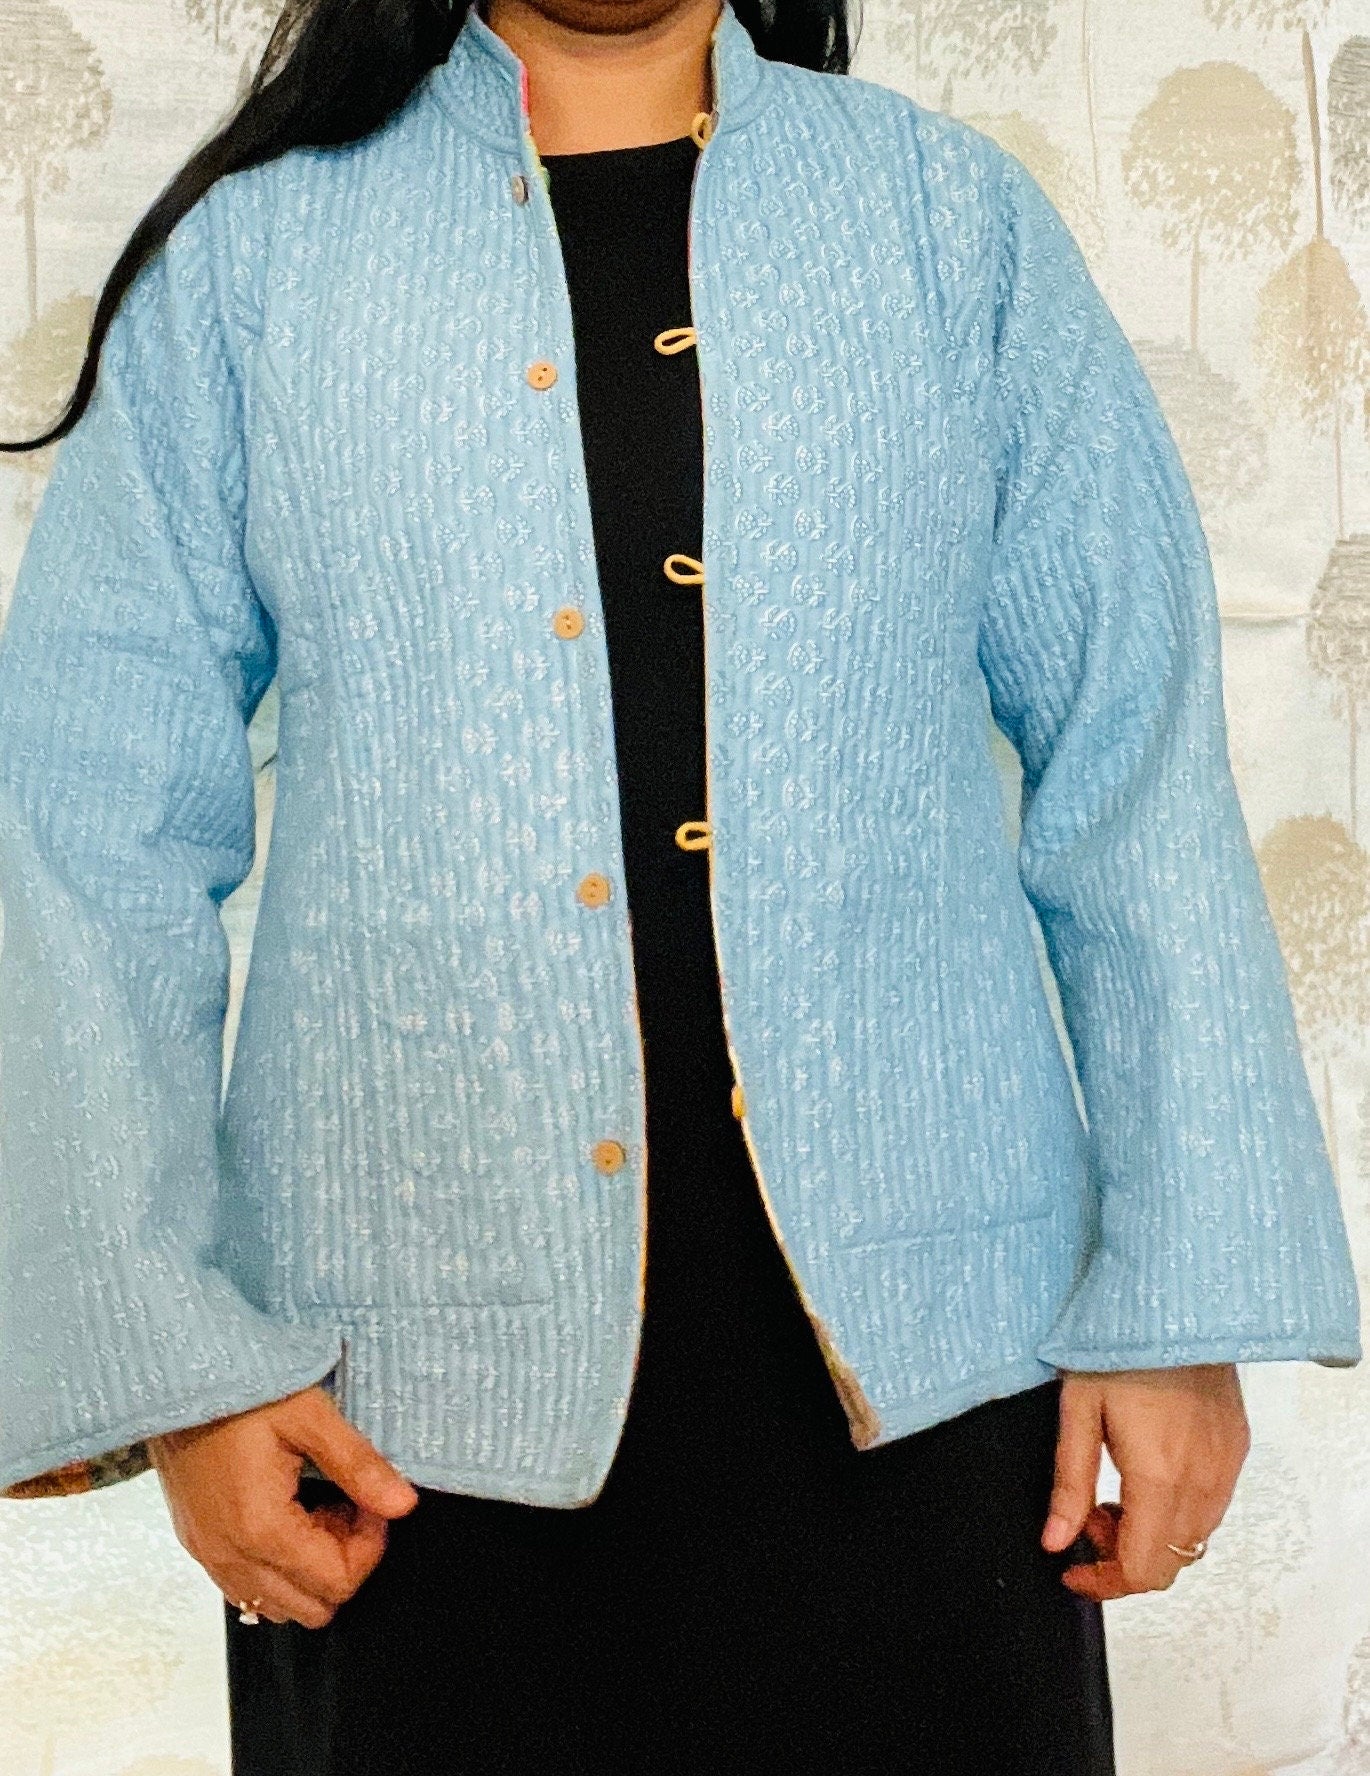 Handmade Reversible Bohemian Patchwork Quilted Jacket, Kantha Jacket, Women's Short Coat, Gift for Her